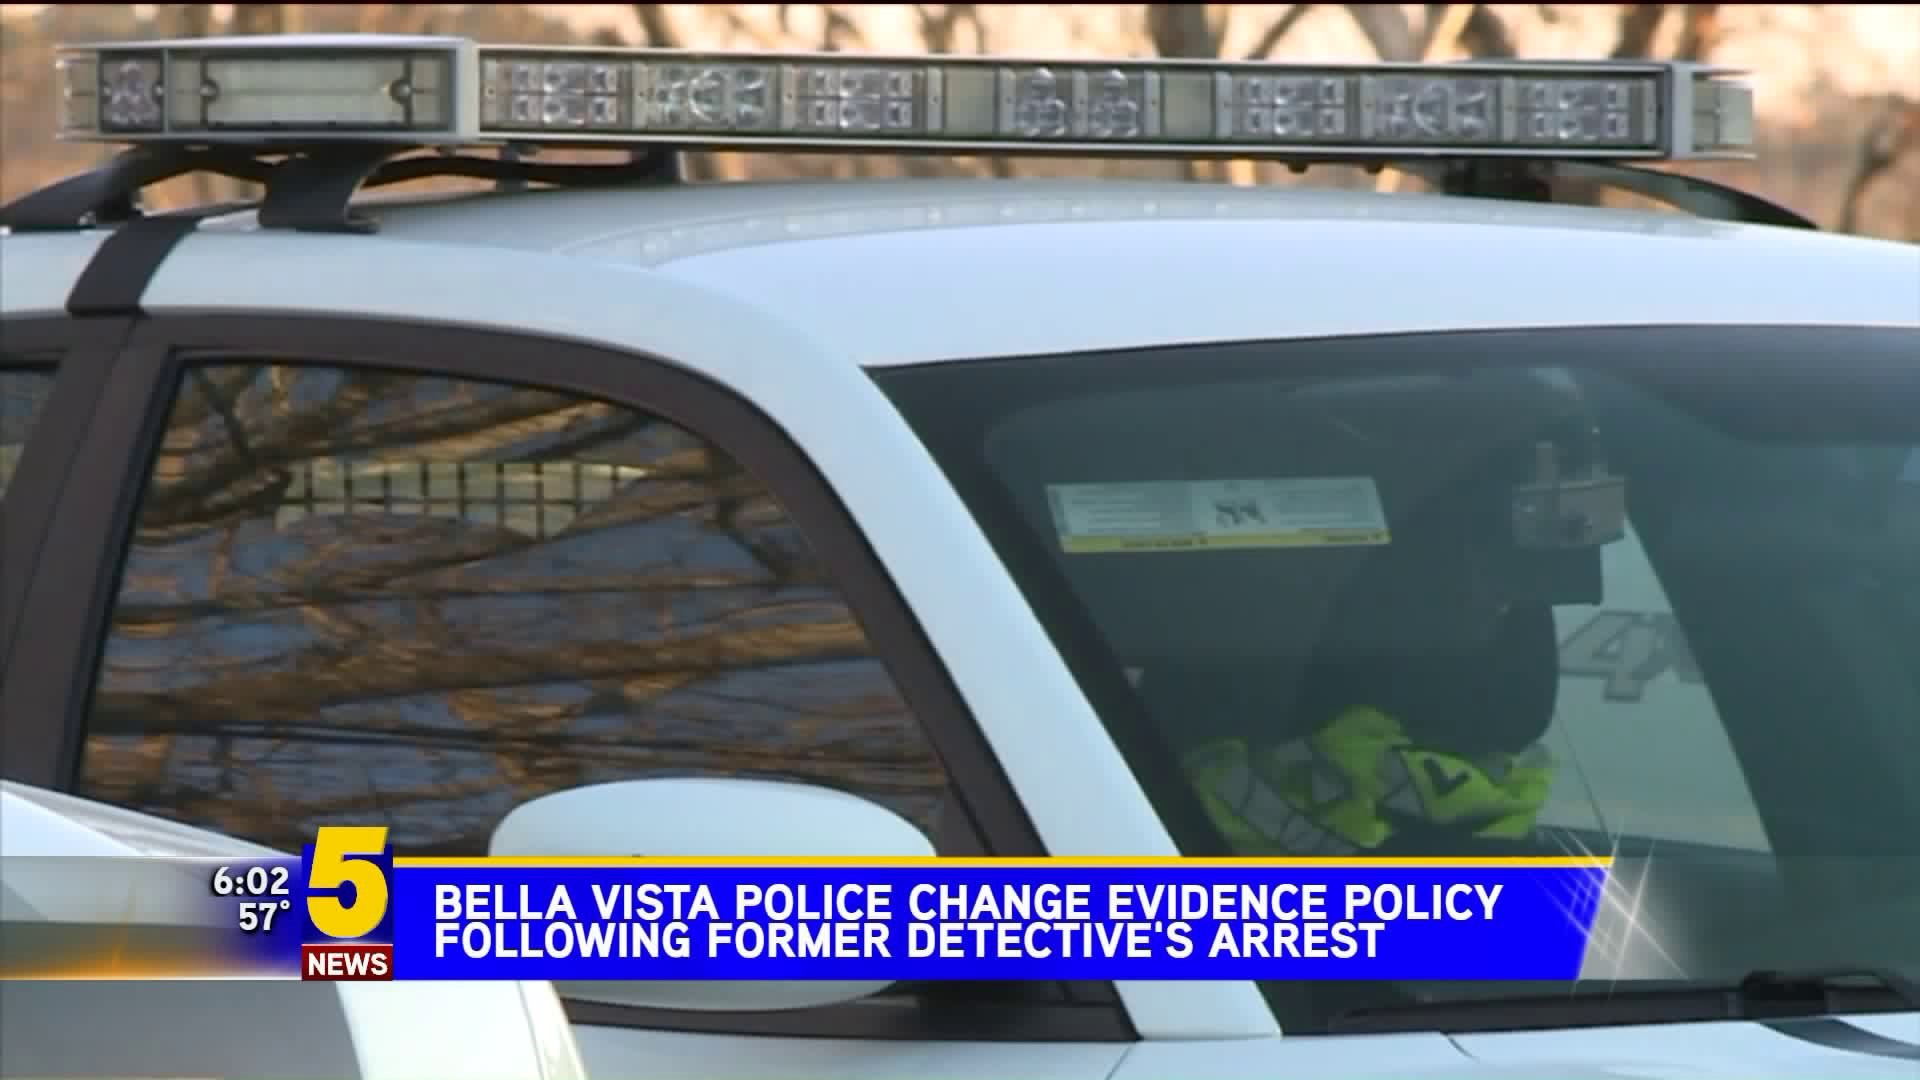 Bella Vista Police Change Evidence Policy